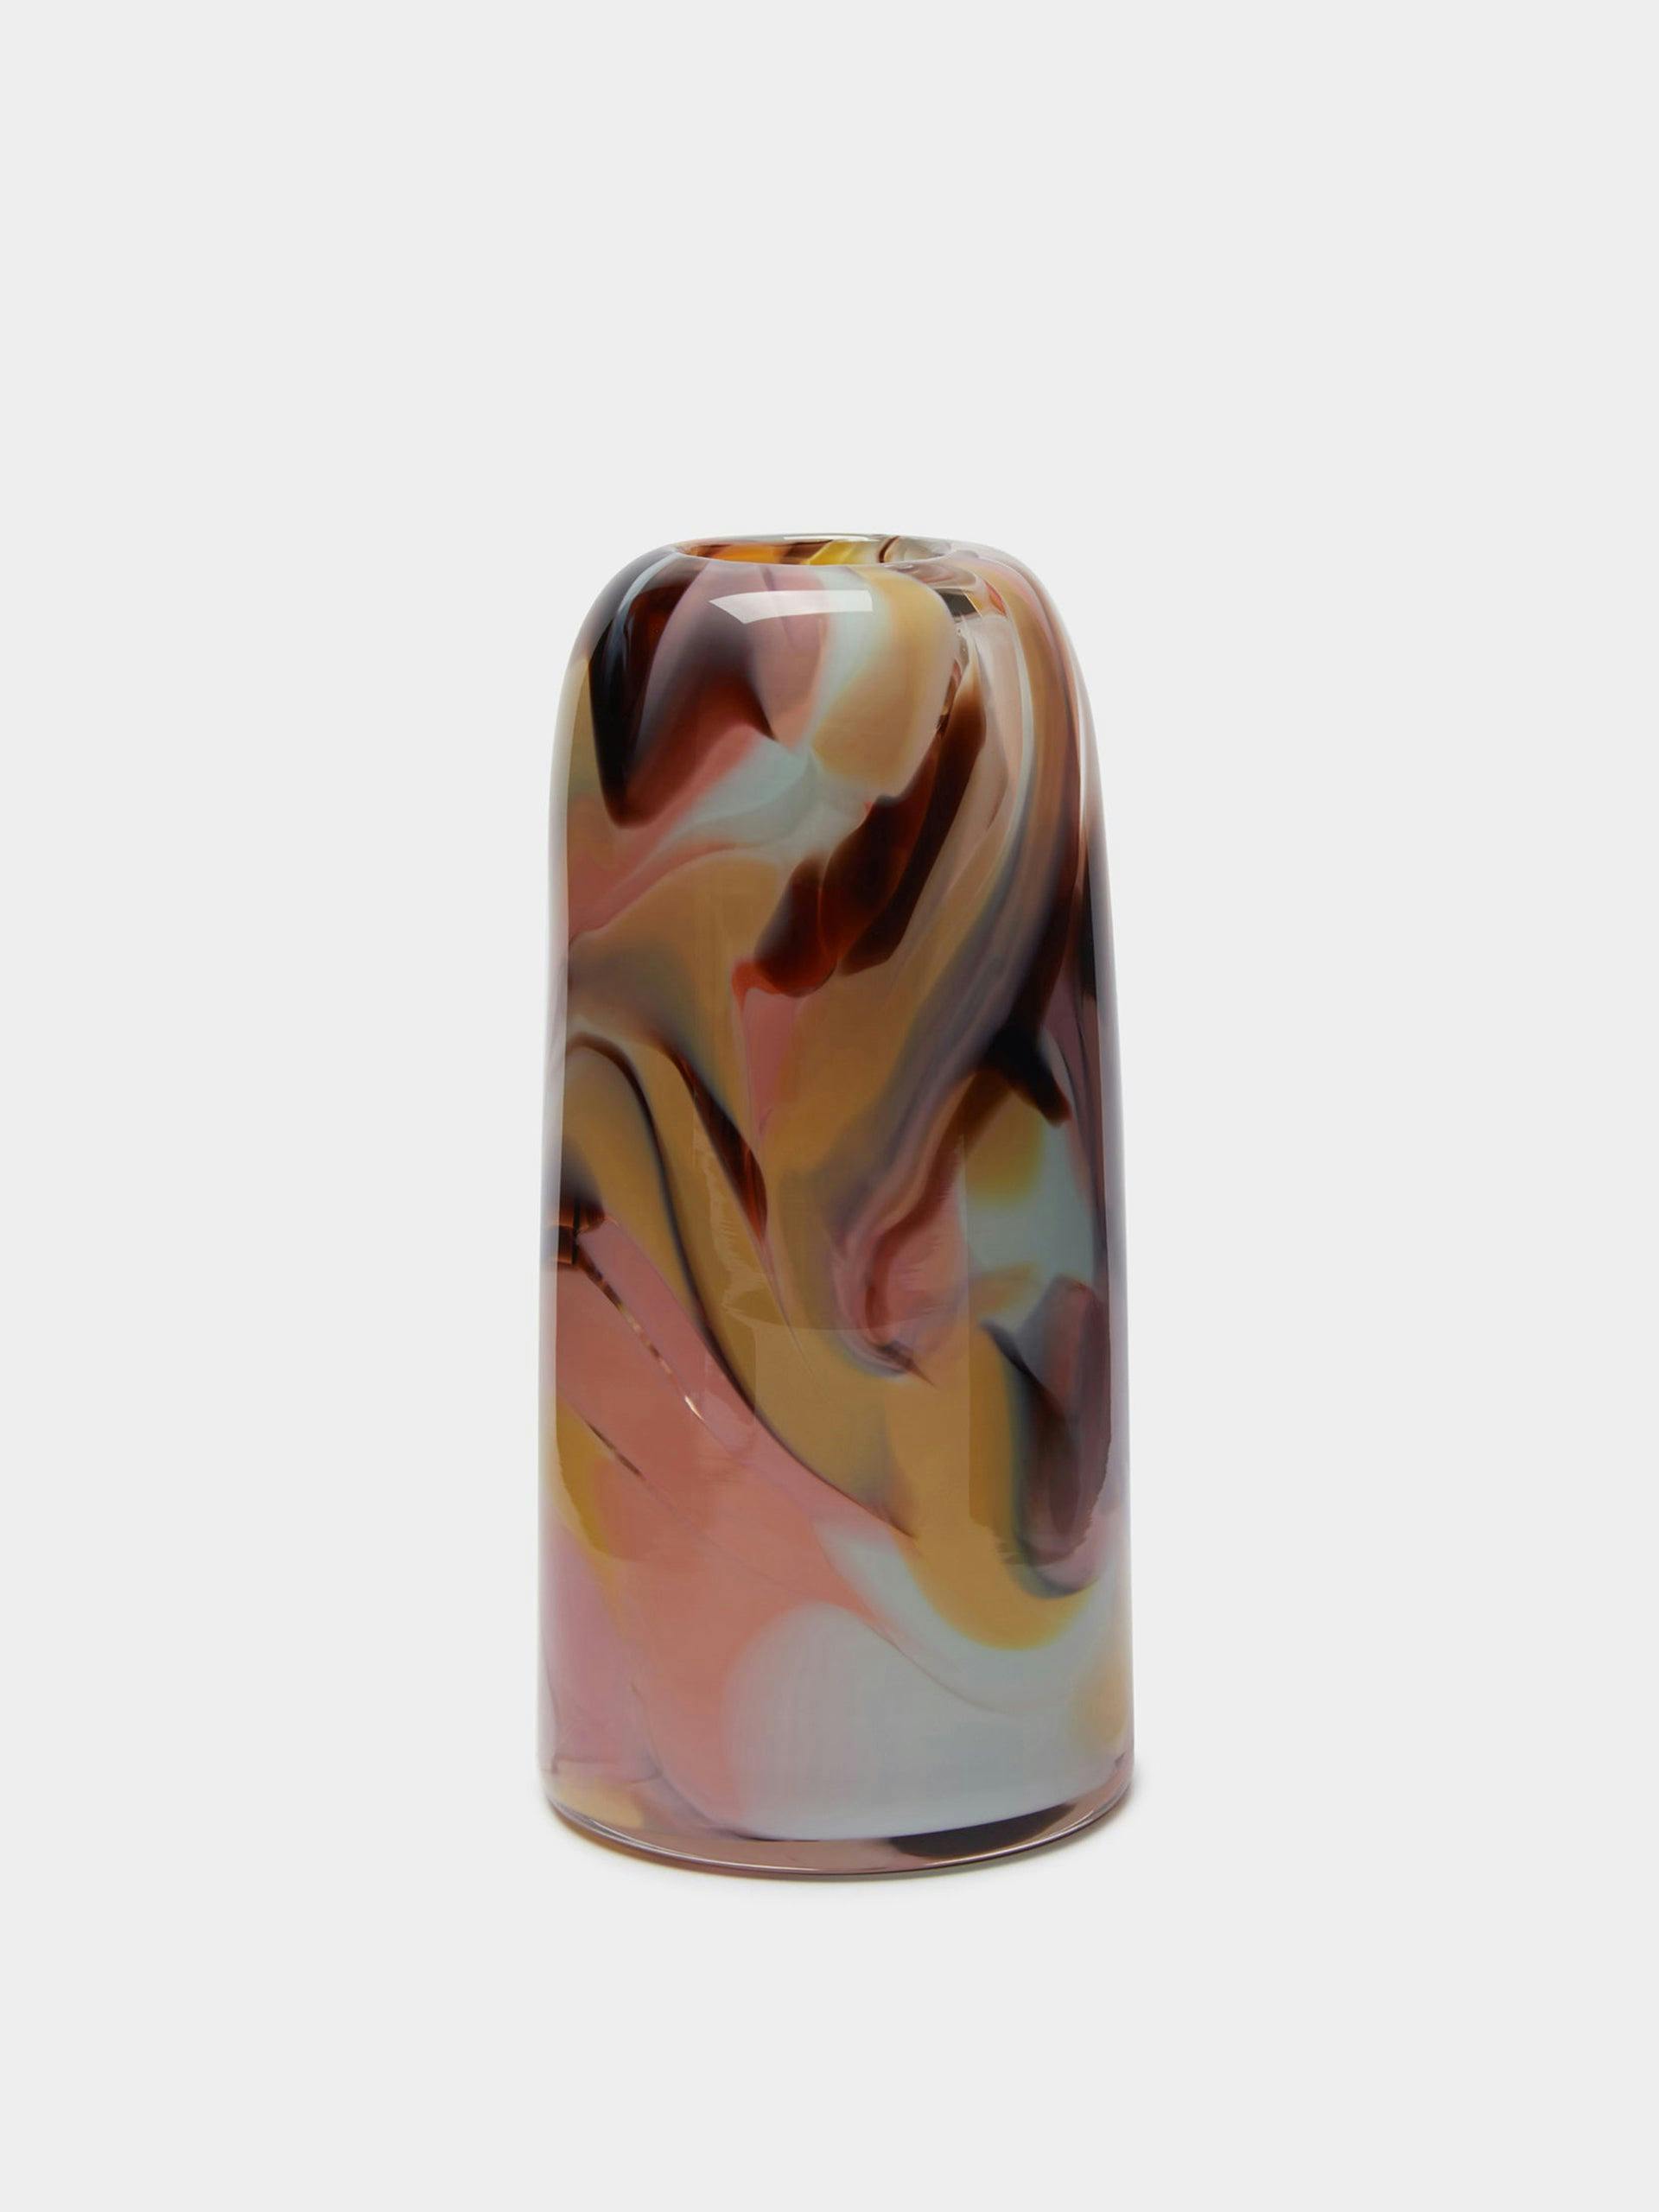 Marbled glass bud vase